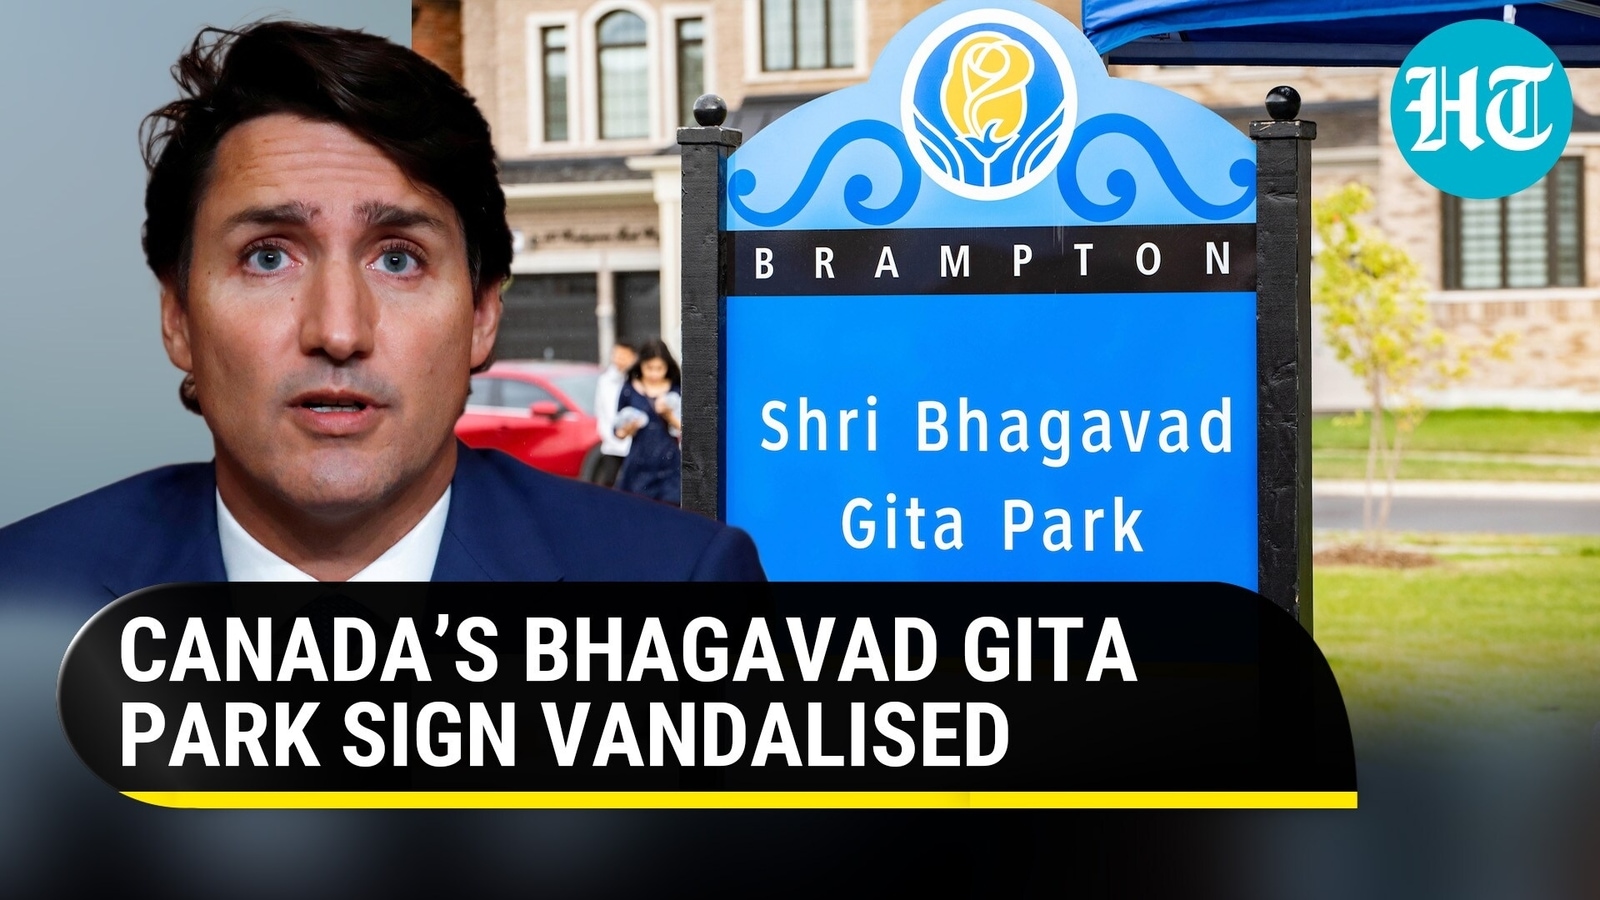 Bhagavad Gita Park sign in Canada vandalised days after India's ...